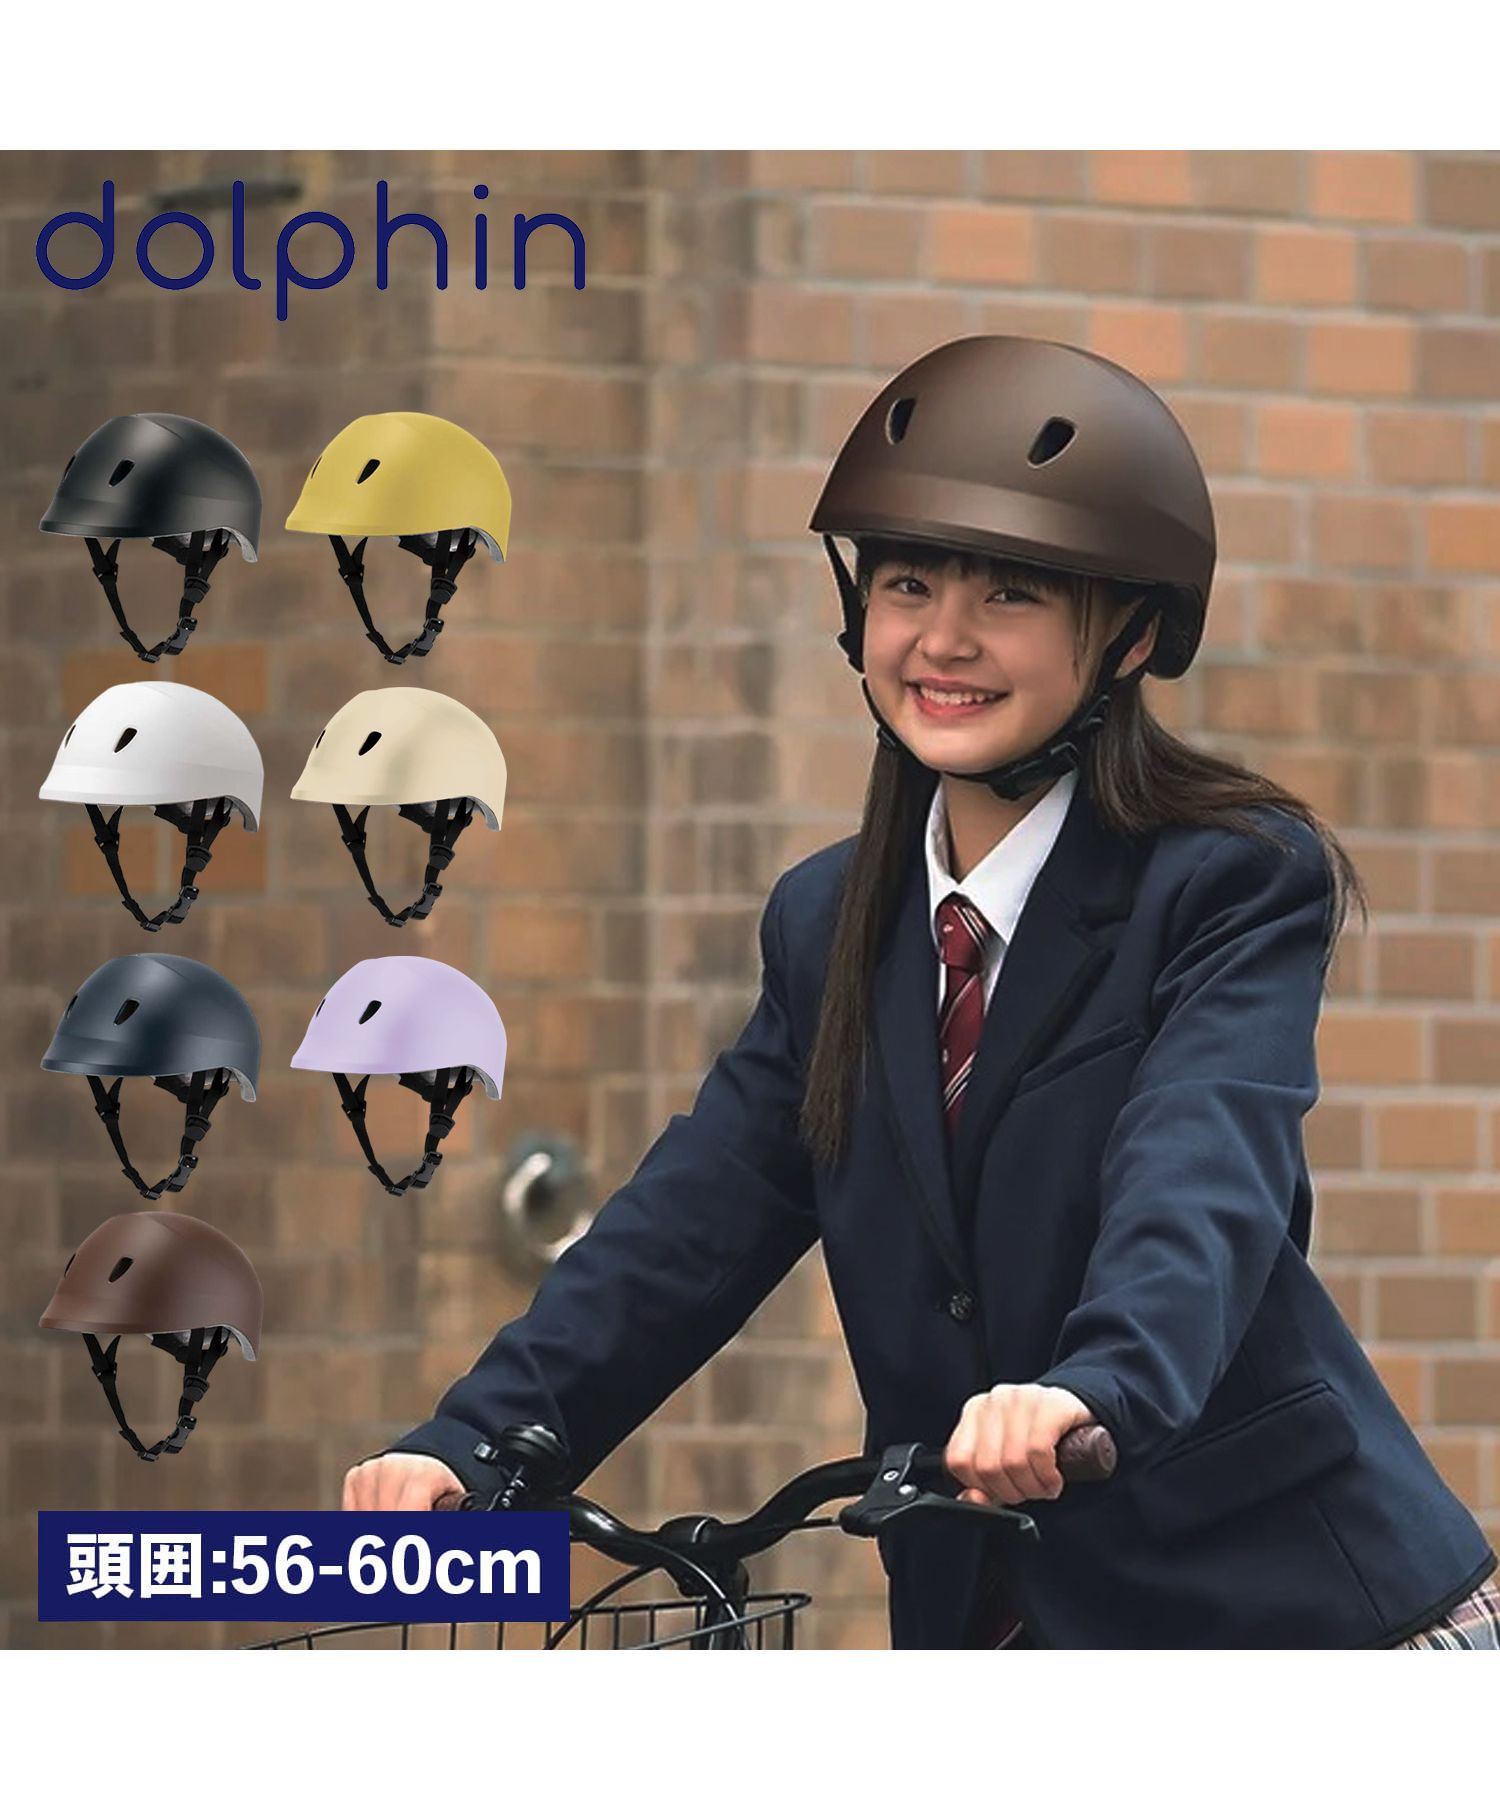 dolphin ドルフィン 自転車用ヘルメット 子供用 通学 中学生 高校生